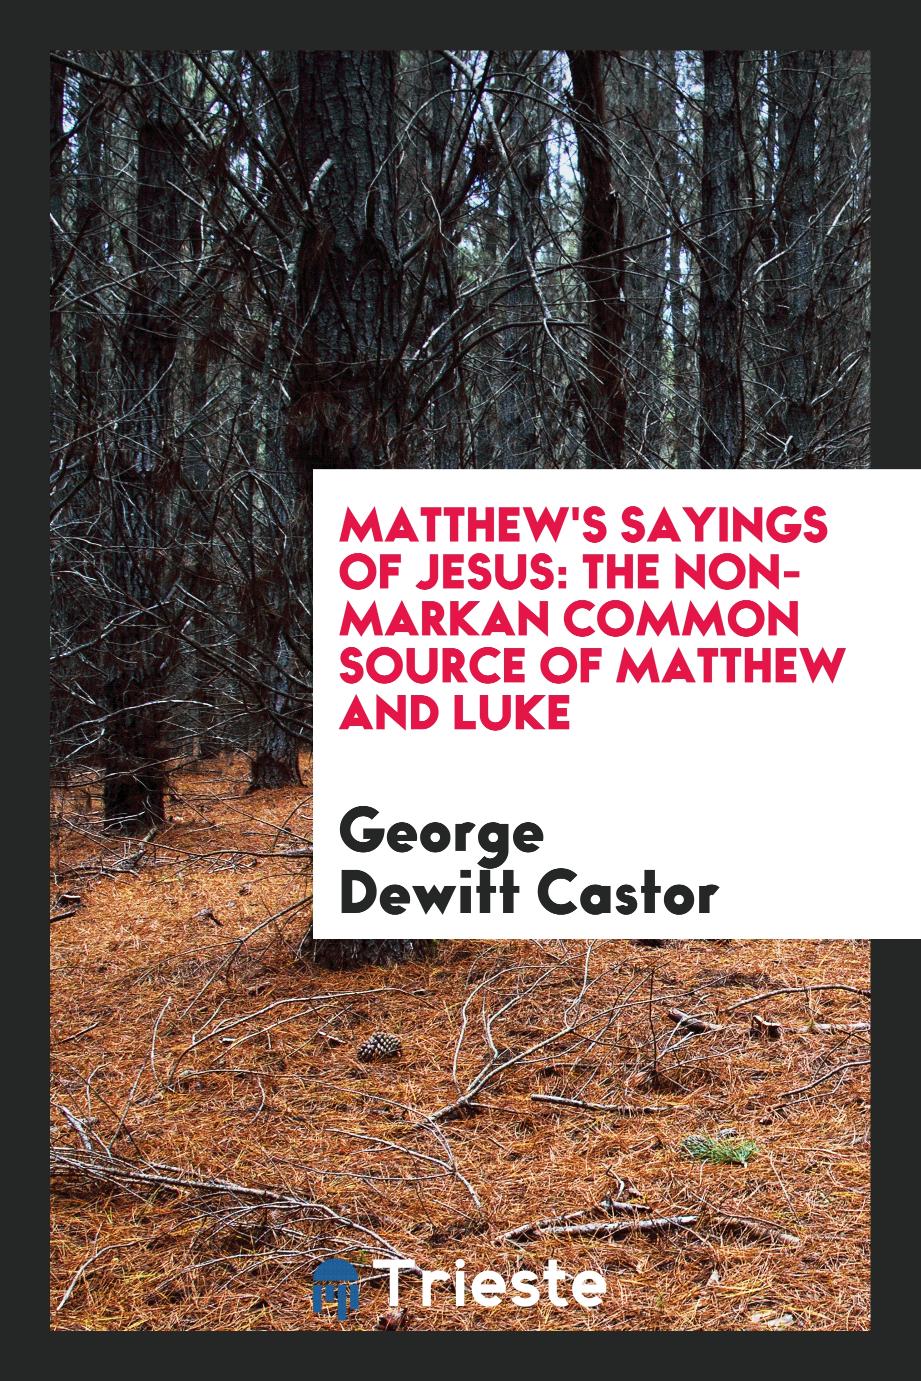 Matthew's sayings of Jesus: the non-Markan common source of Matthew and Luke